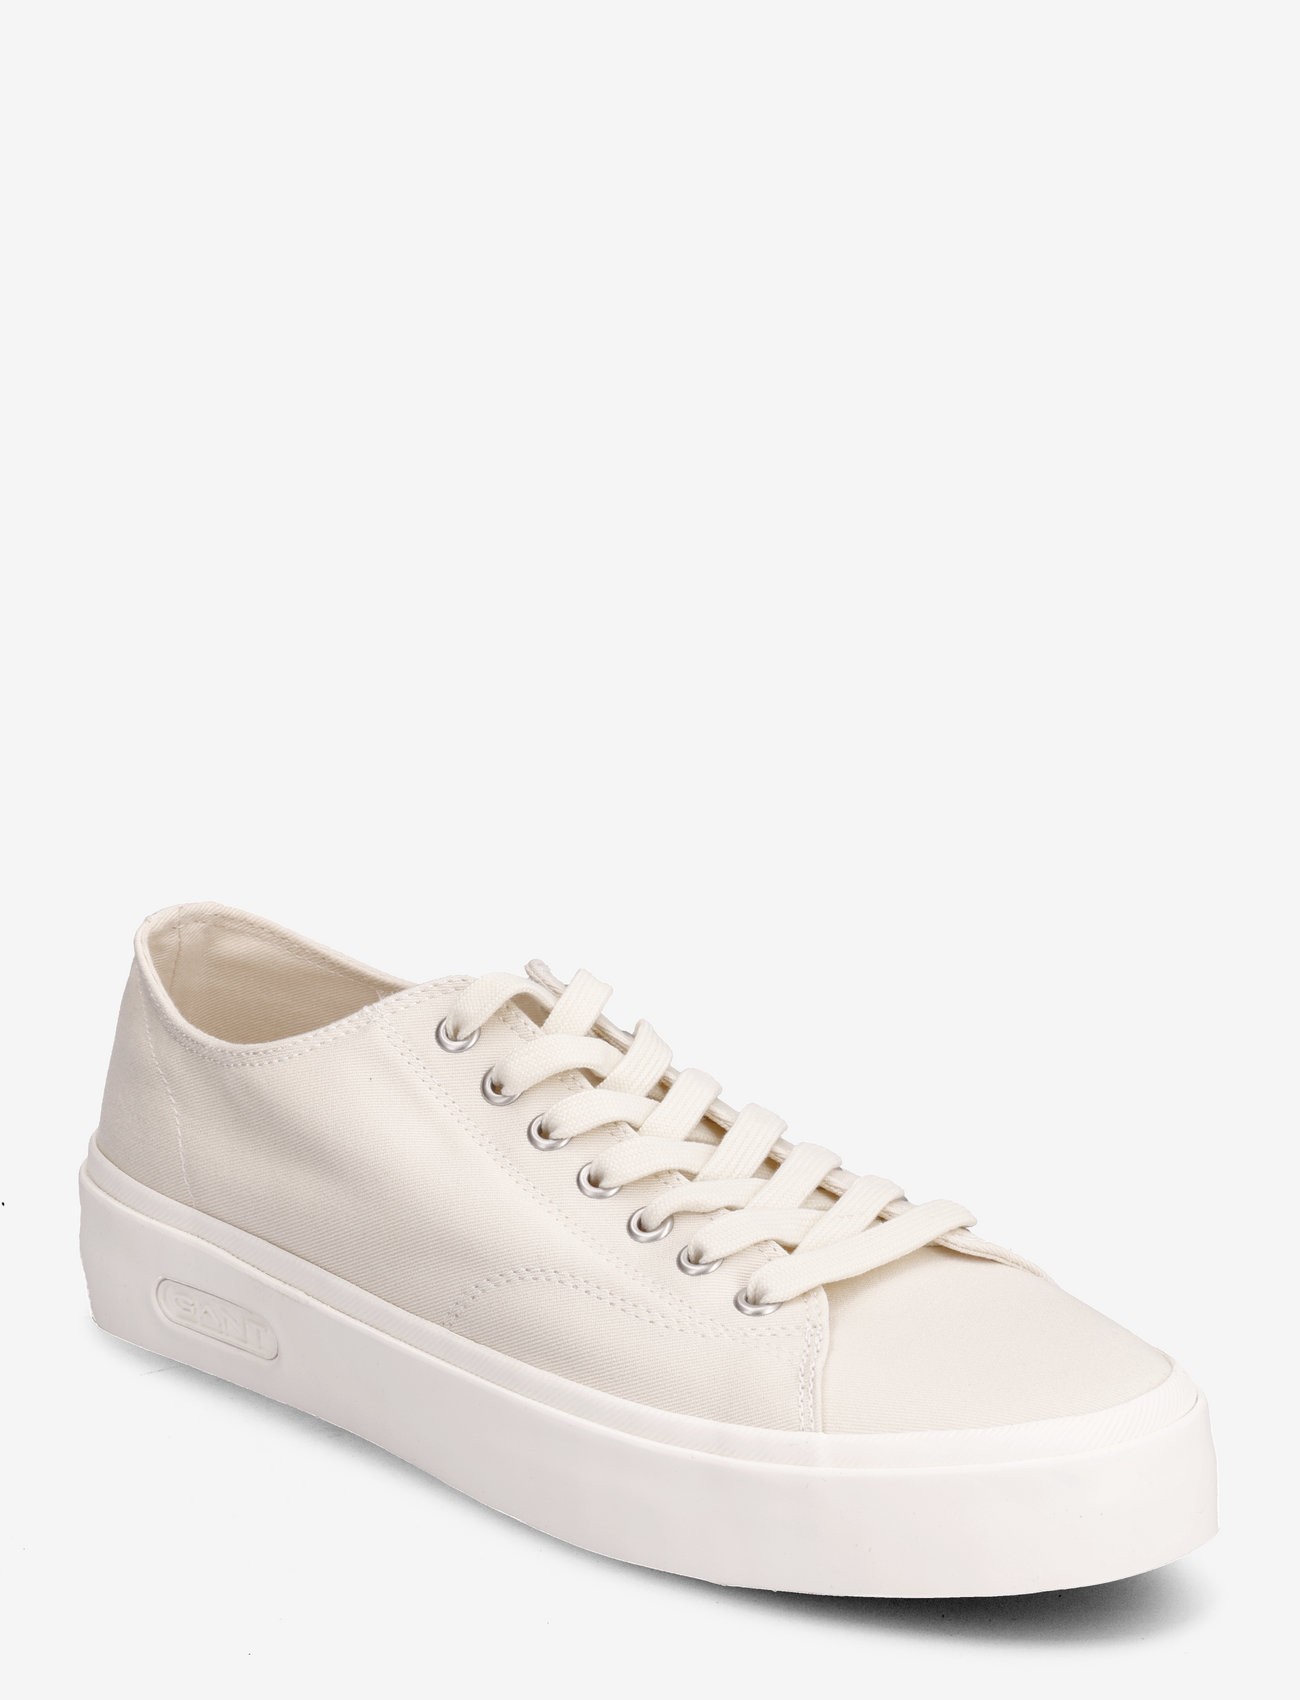 GANT - Prepbro Sneaker - off white - 0